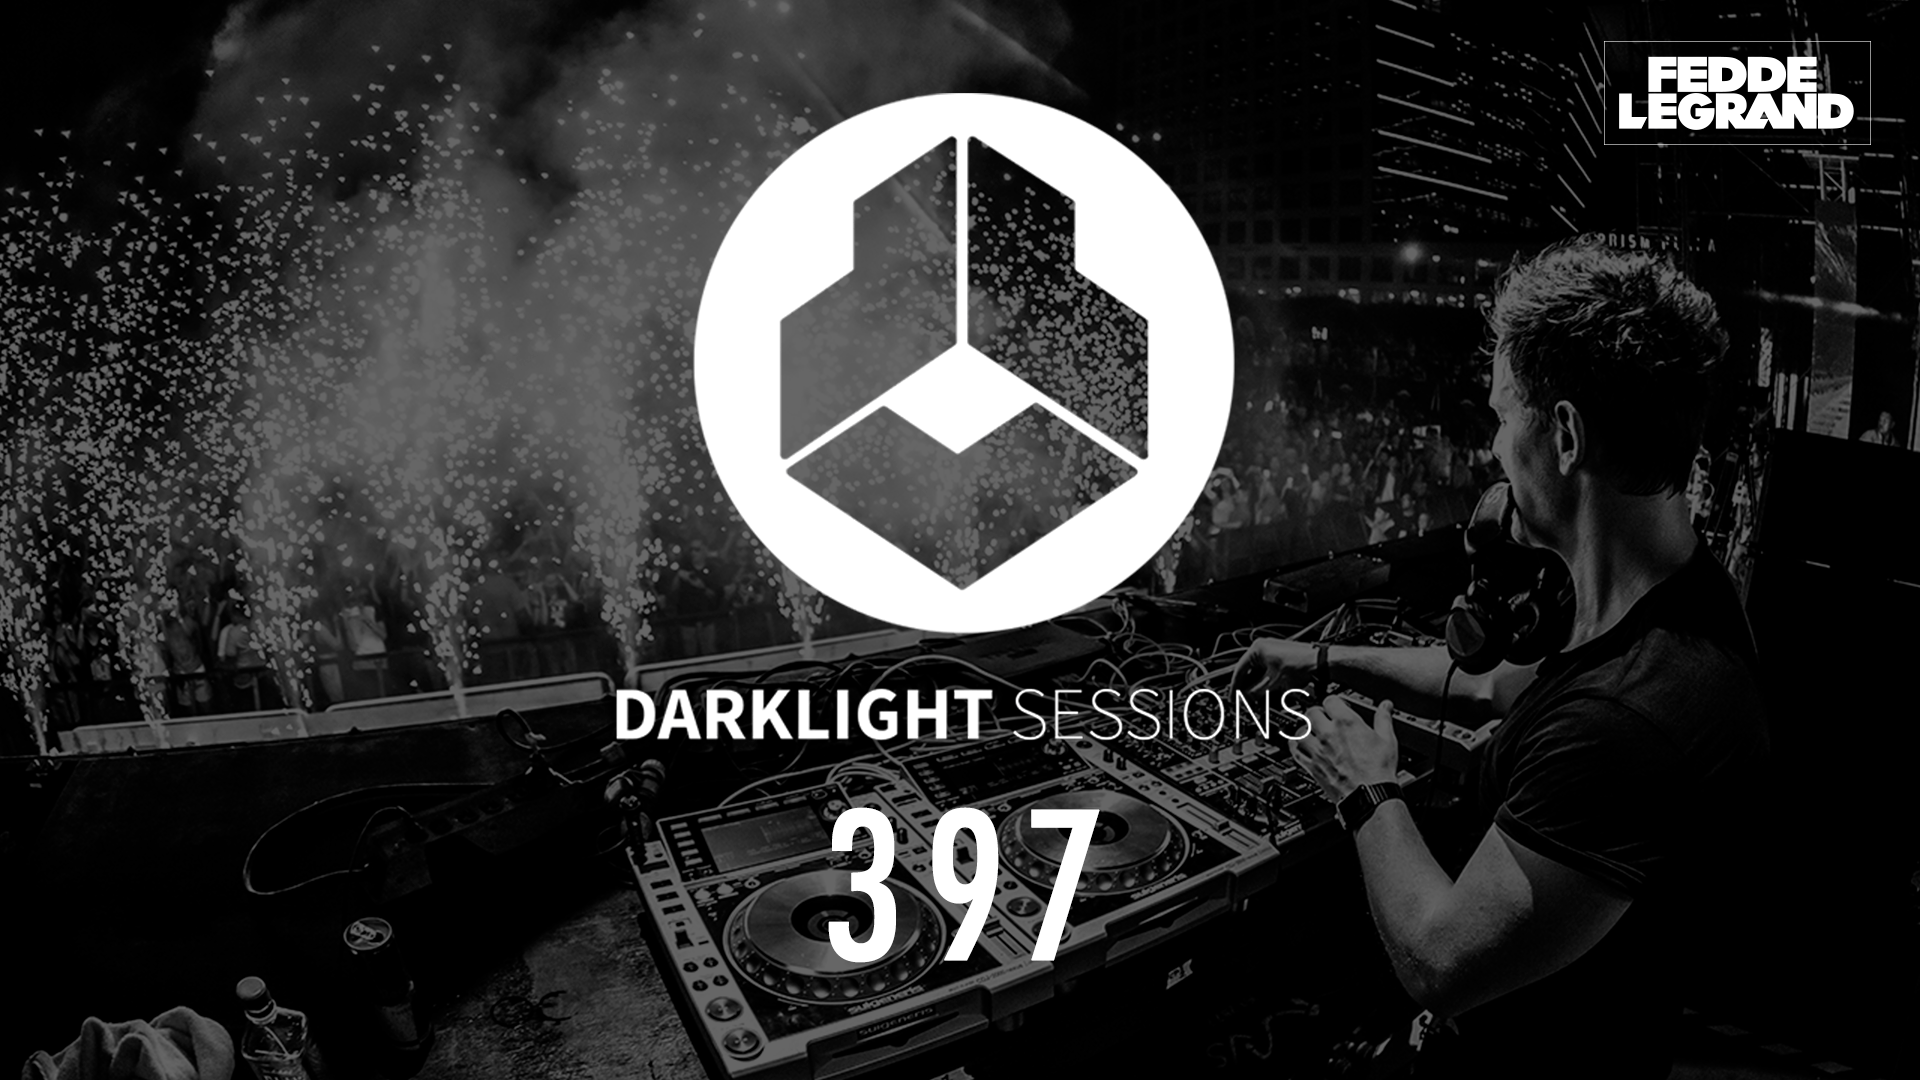 Darklight Sessions 397